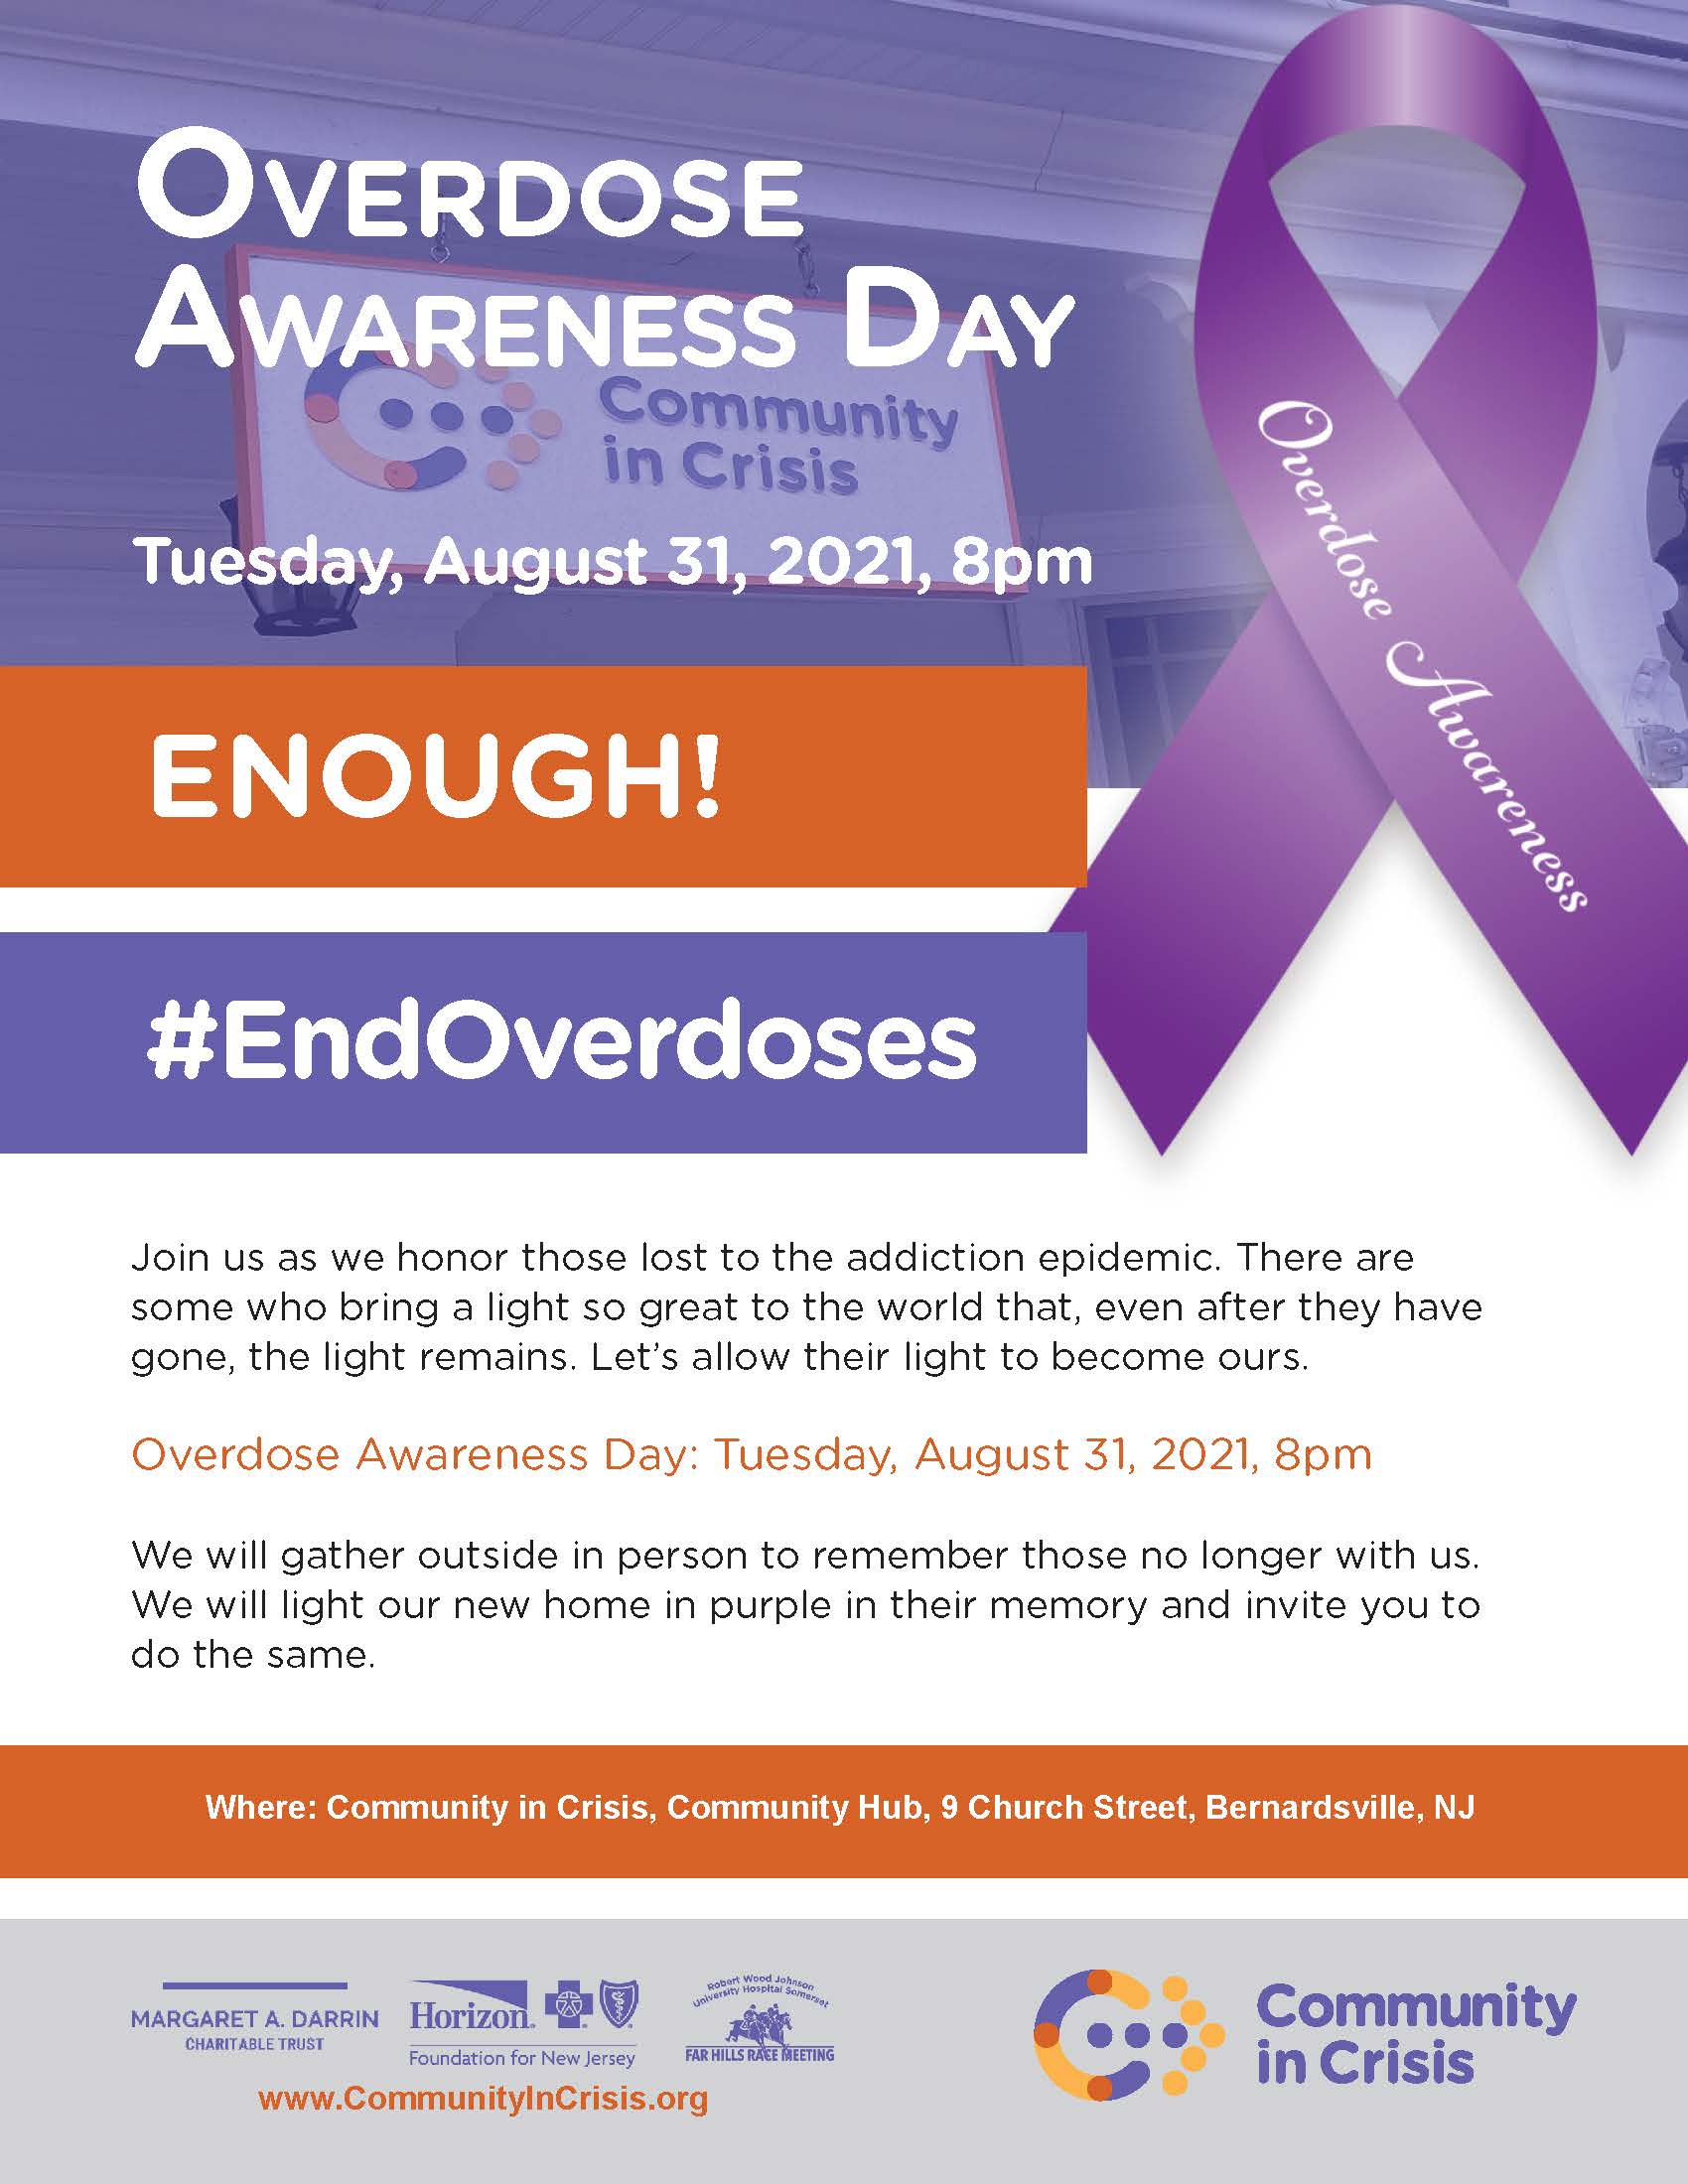 CiC Overdose Awareness Day 2021